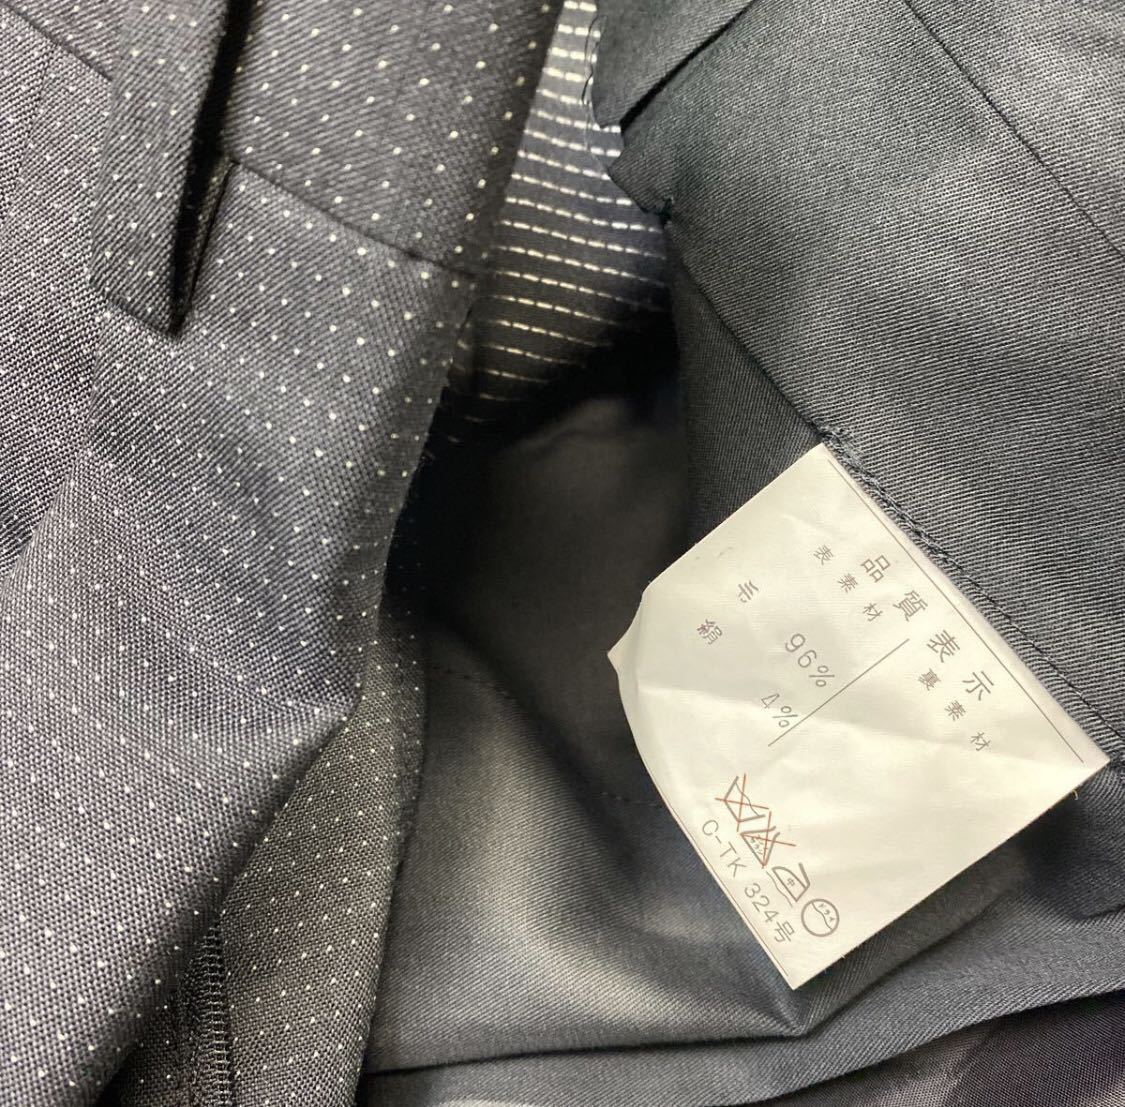  new goods b goods high class . brand tuxedo setup size AM wool silk made made in Japan charcoal gray . platinum. dot pattern immediately chapter pants 